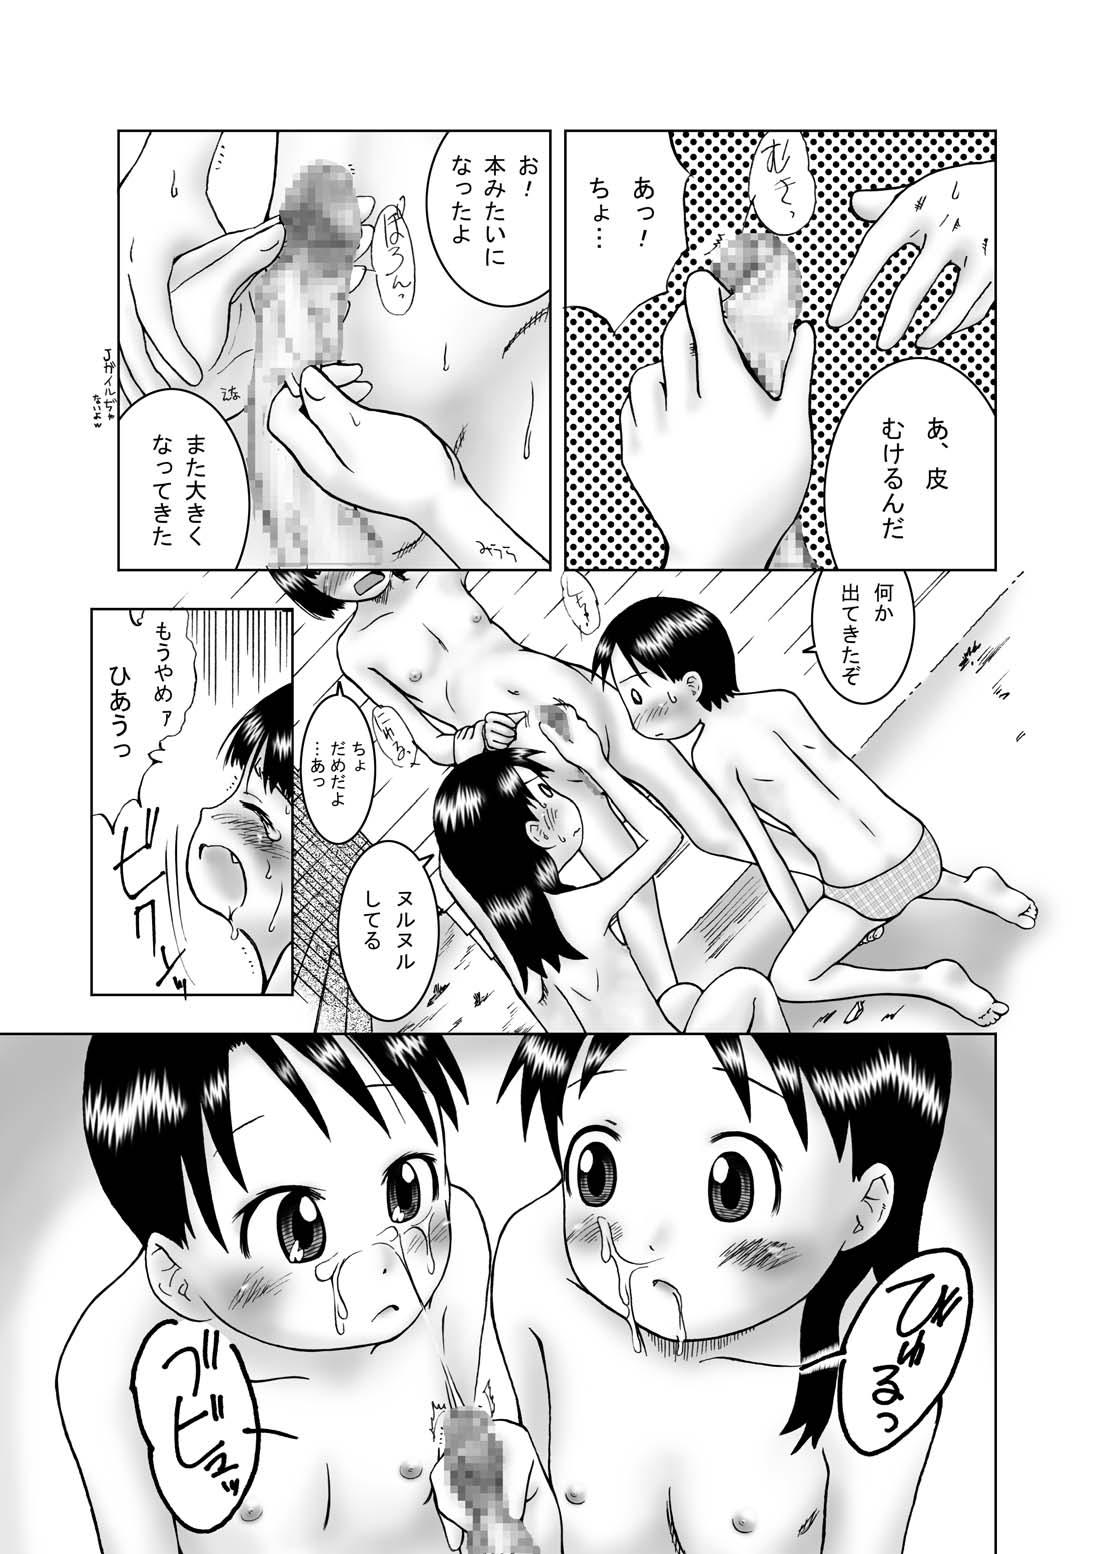 Mofos Aya x Haya - Yotsubato T Girl - Page 9